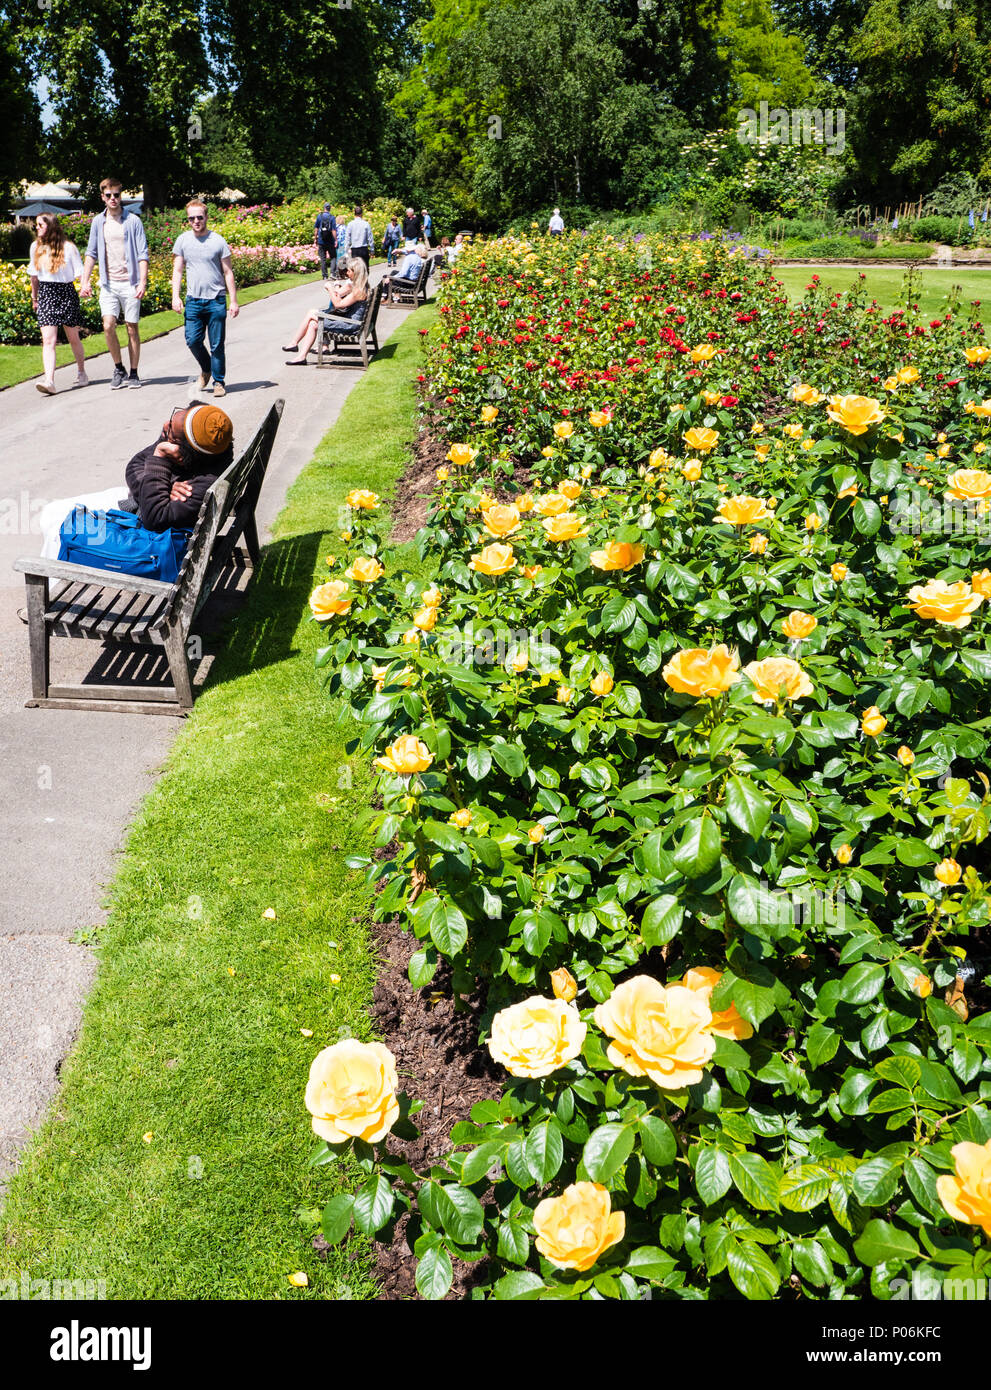 Man Sleeping, Queen Mary's Rose Gardens, Regents Park, London, England, UK, GB. Stock Photo